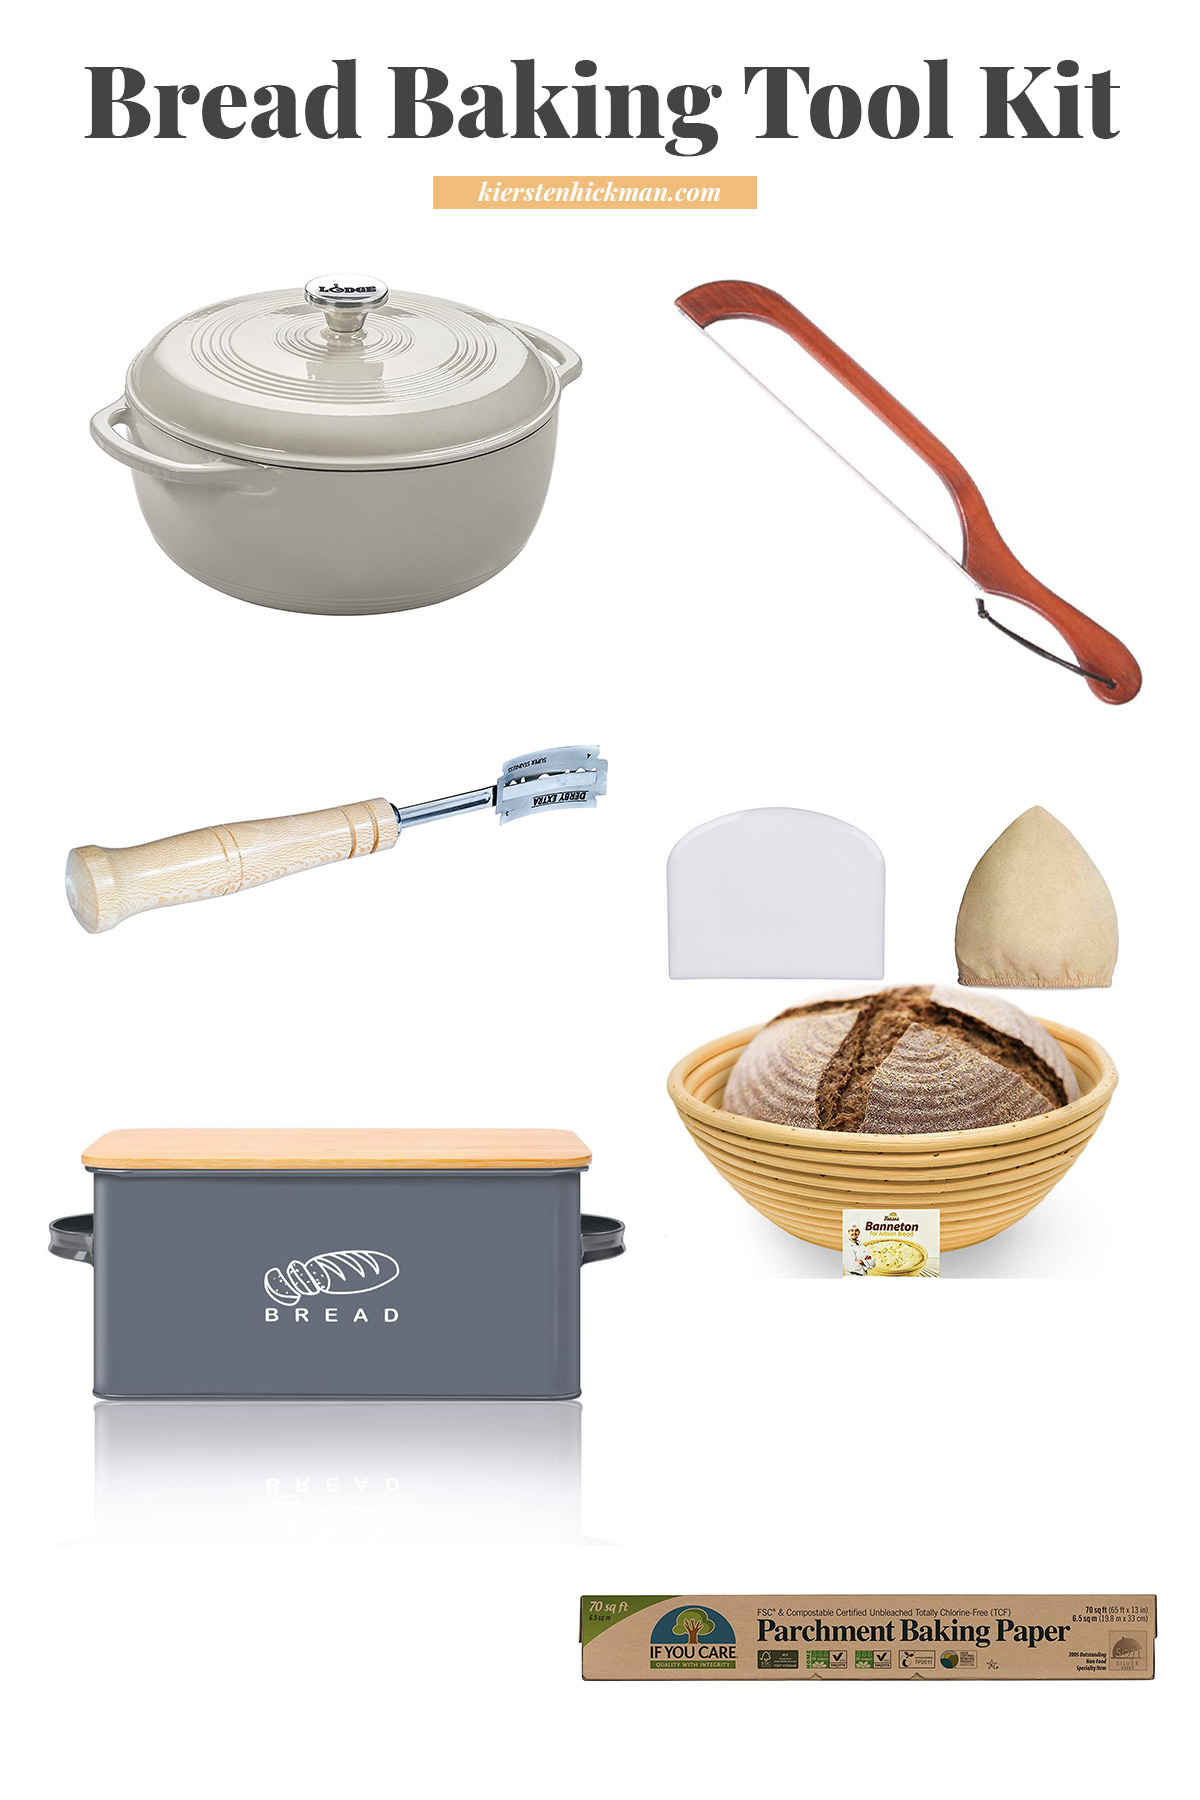 bread baking tool kit items